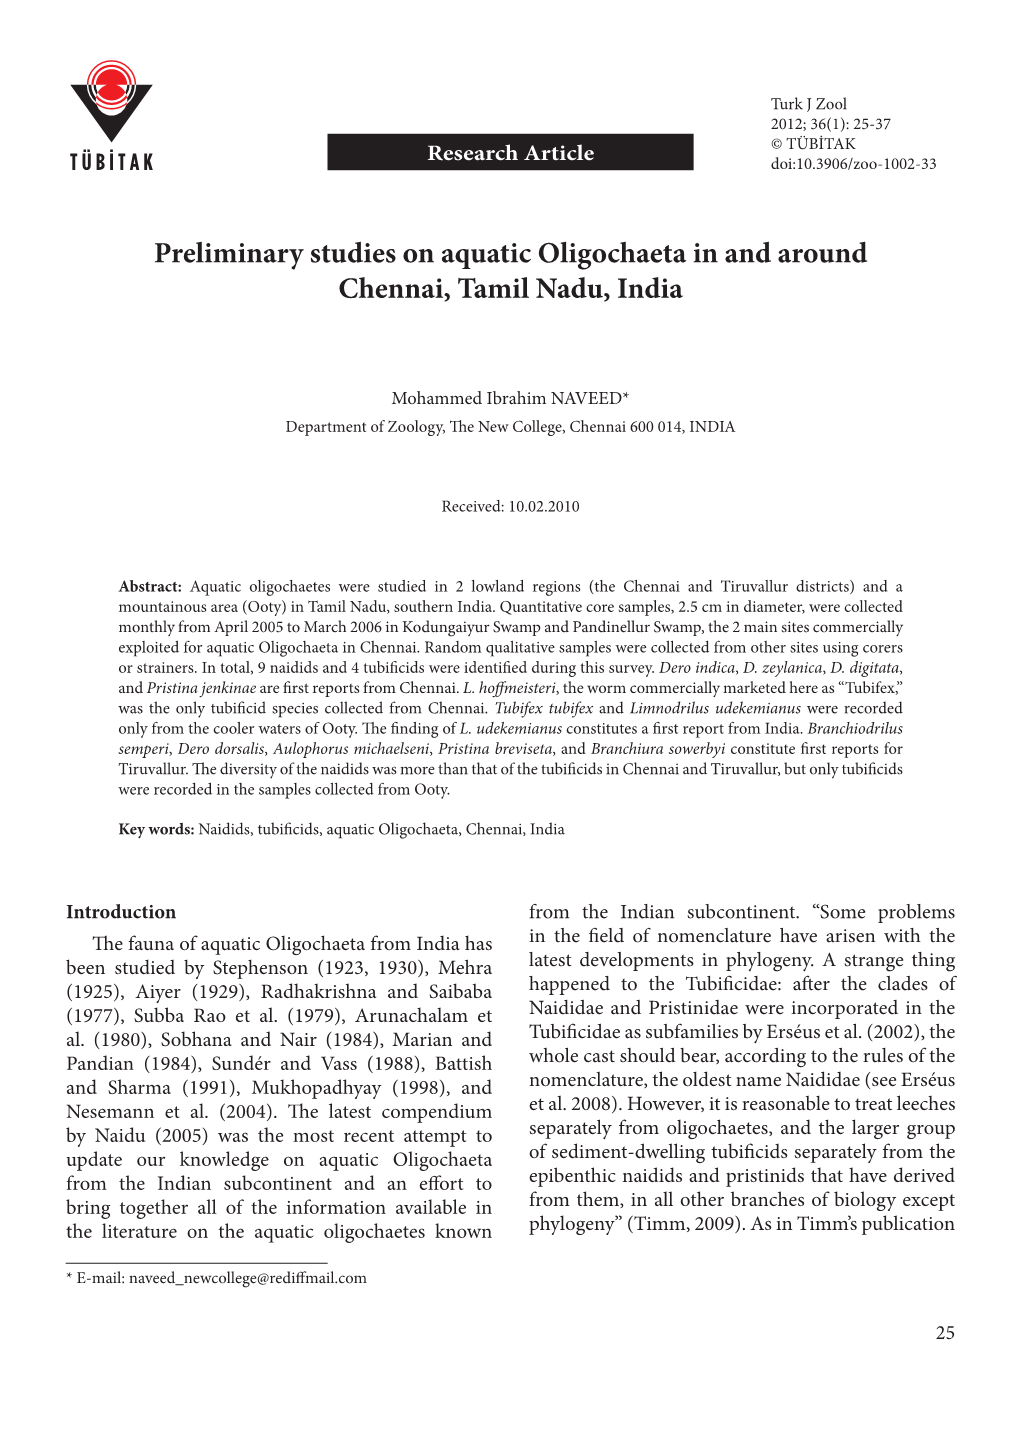 Preliminary Studies on Aquatic Oligochaeta in and Around Chennai, Tamil Nadu, India